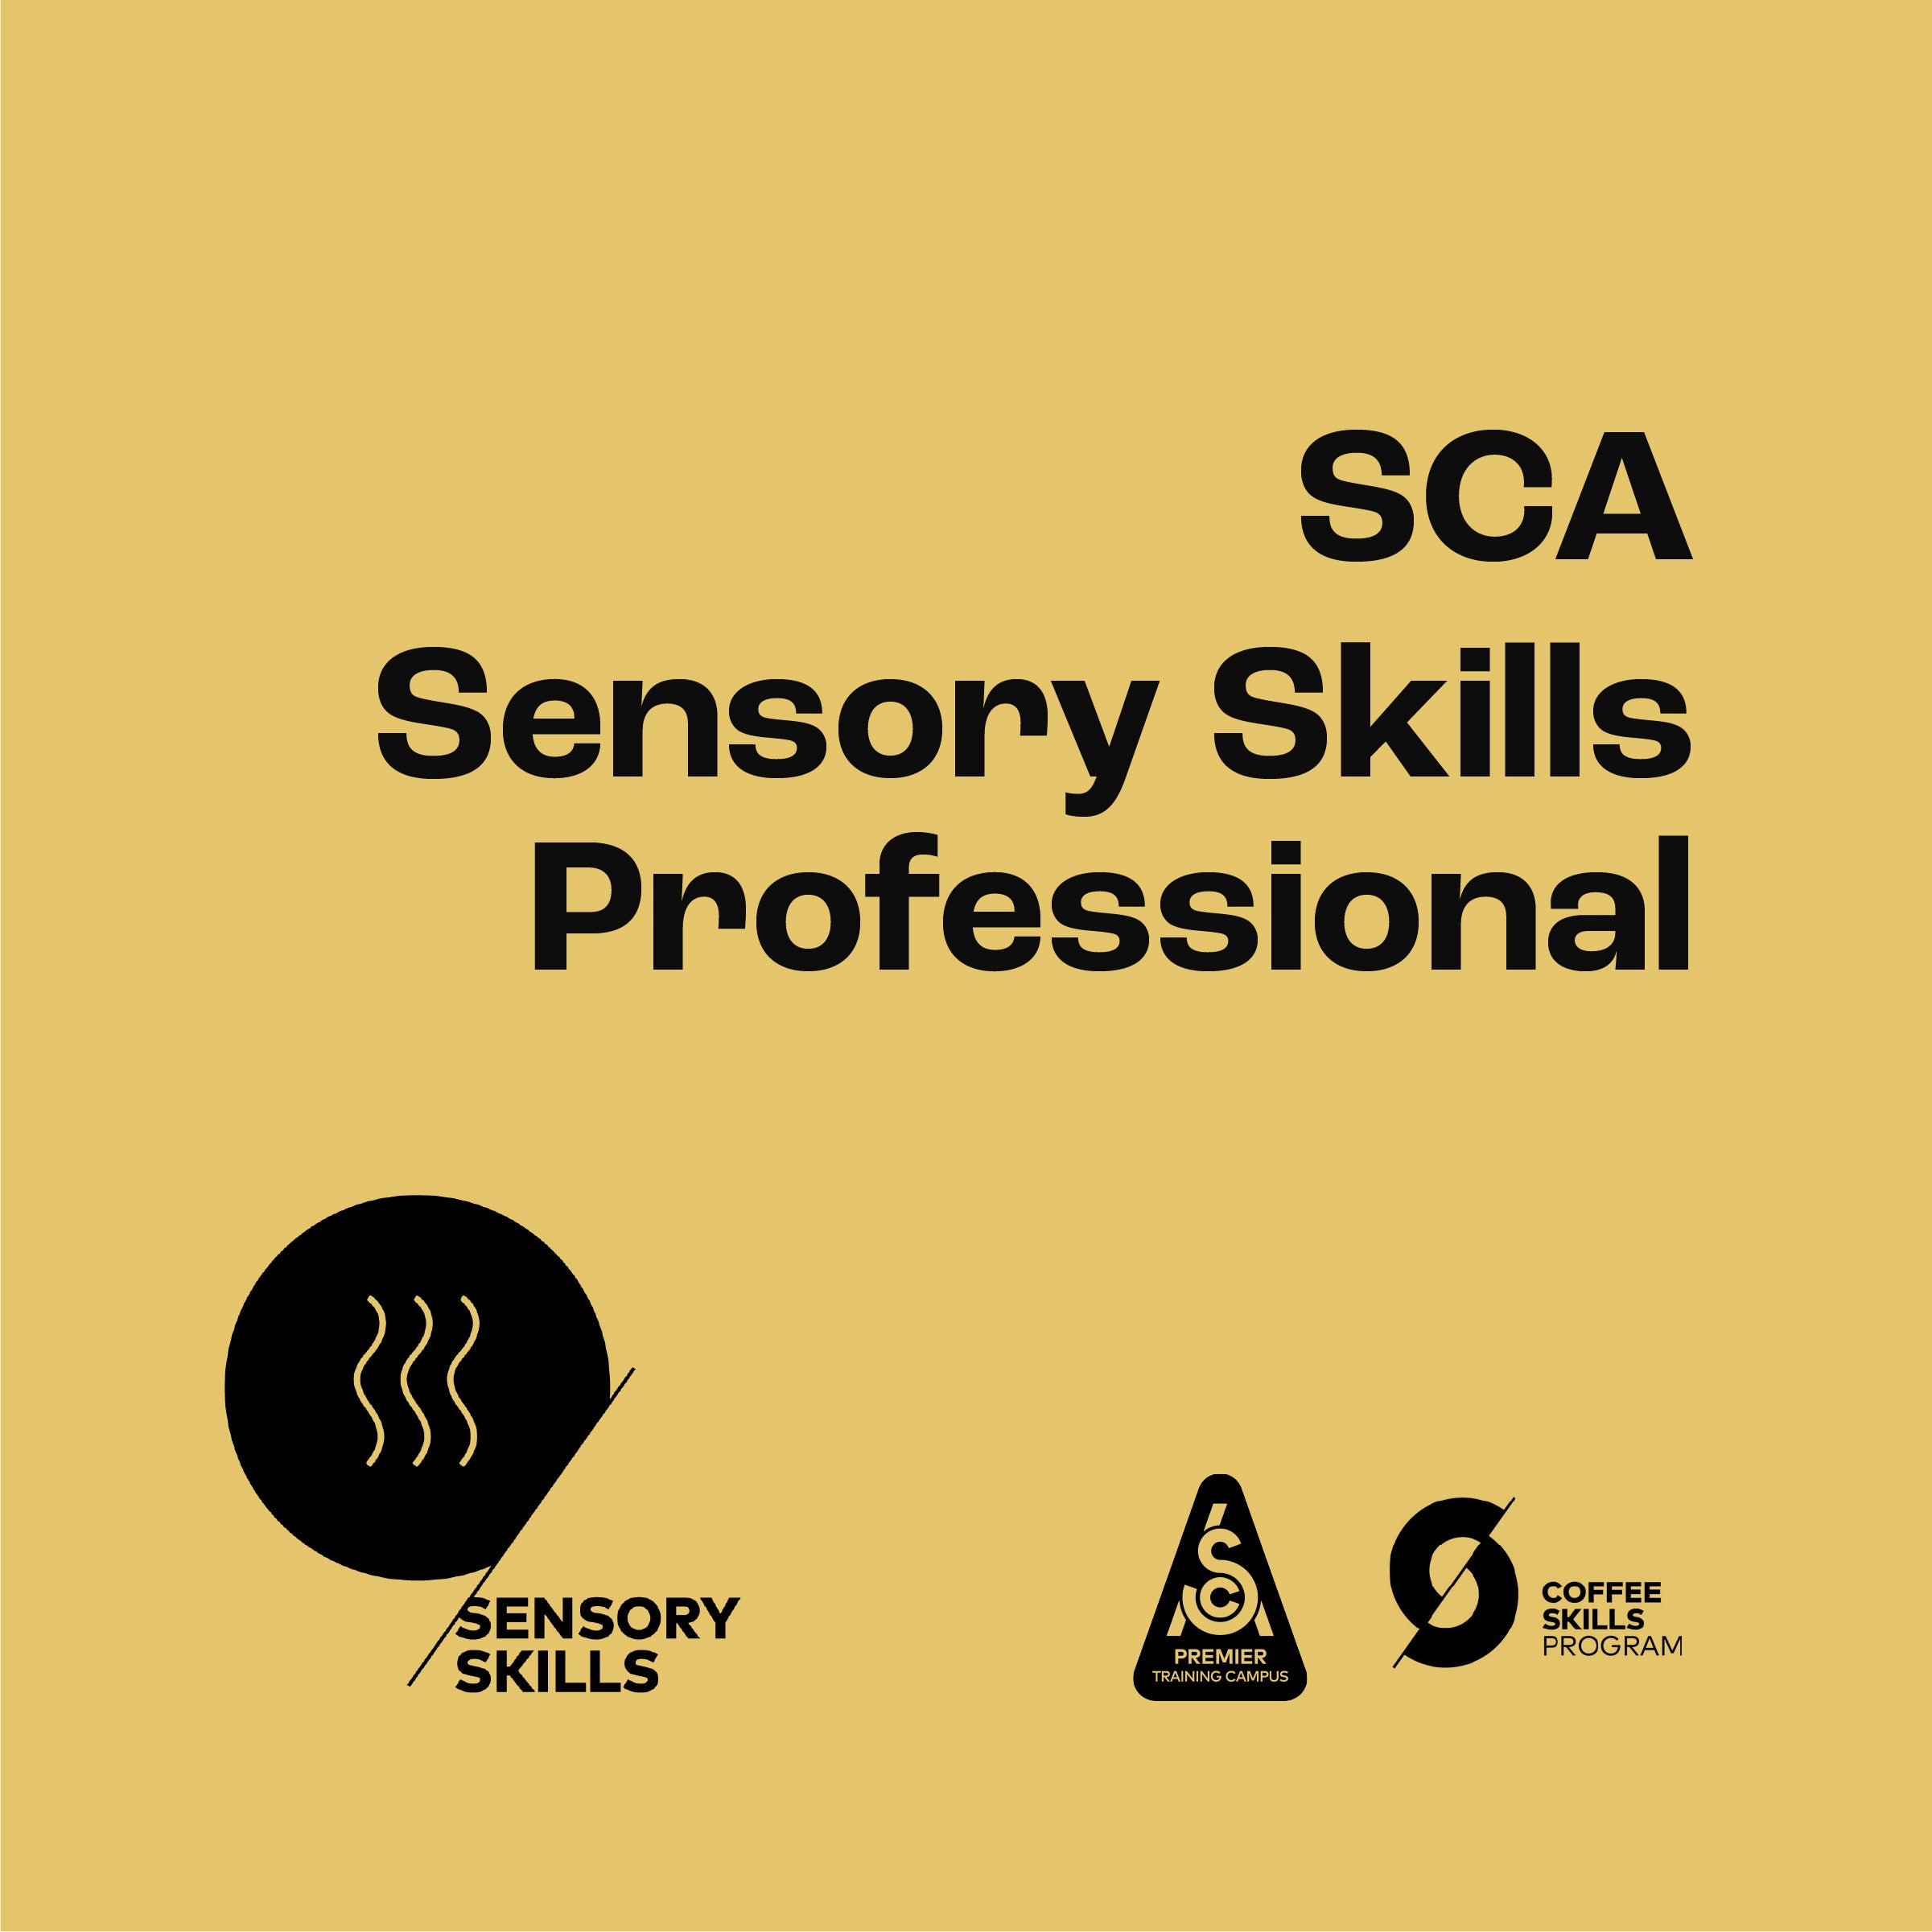 SCA Sensory Skills - Professional